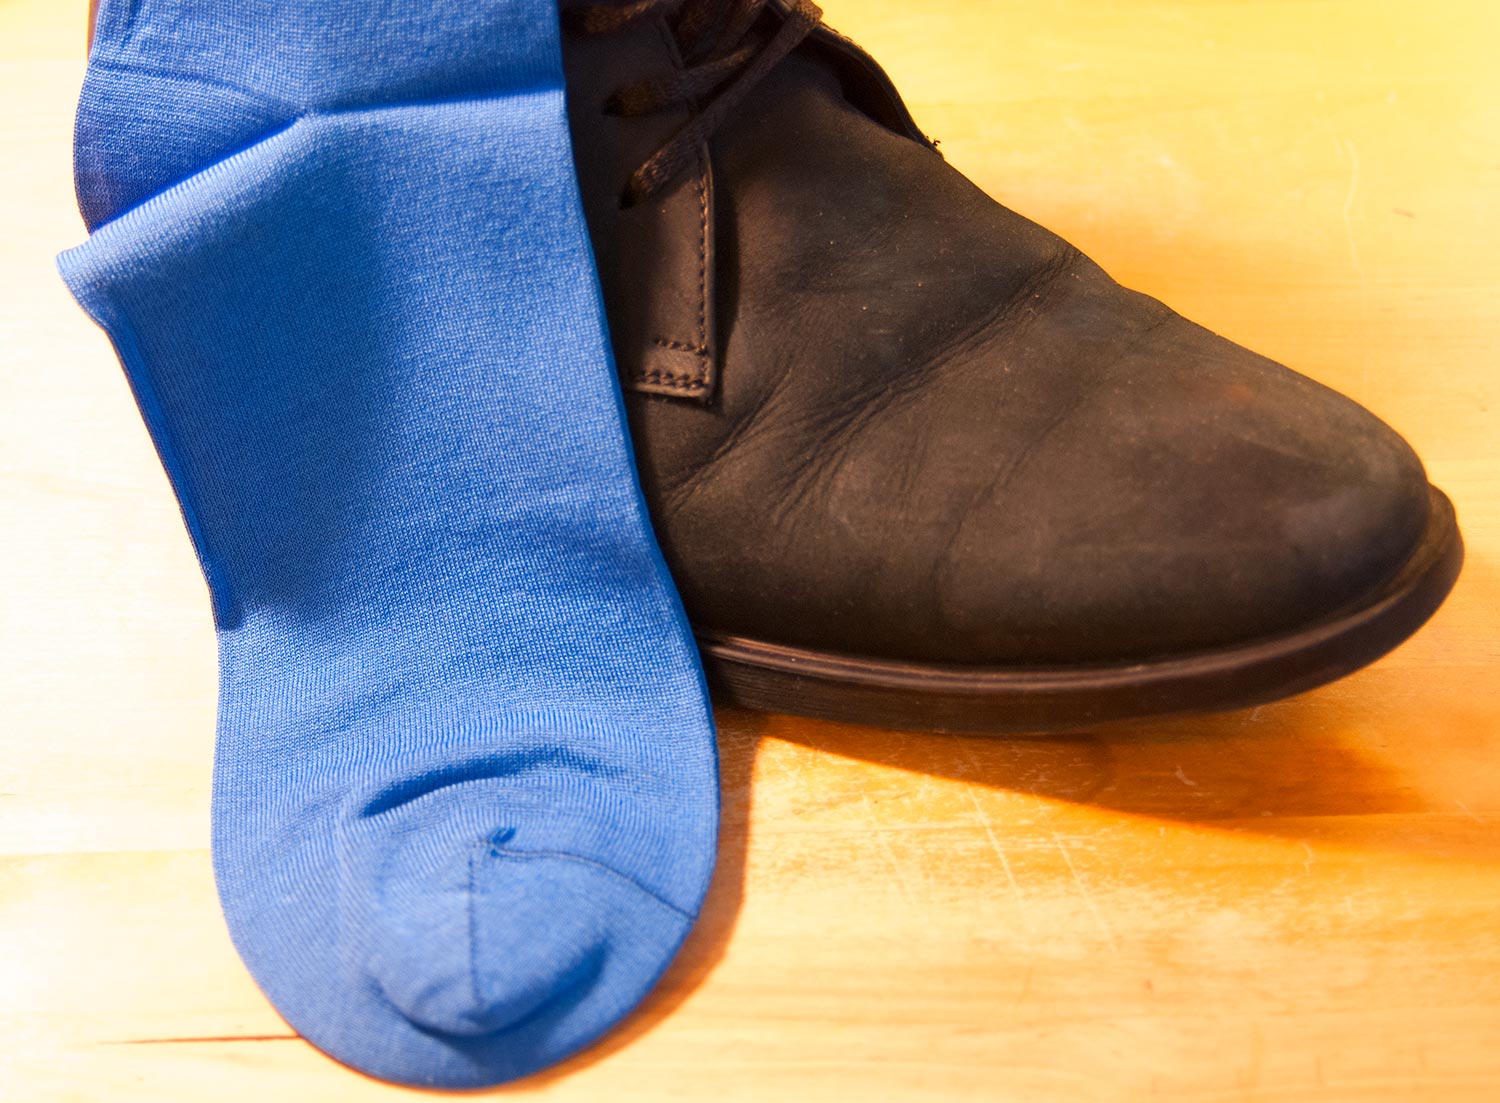 Фильдекосовые мужские носки Philippe Matignon, оттенок Indaco. Фото: bracatuS.com